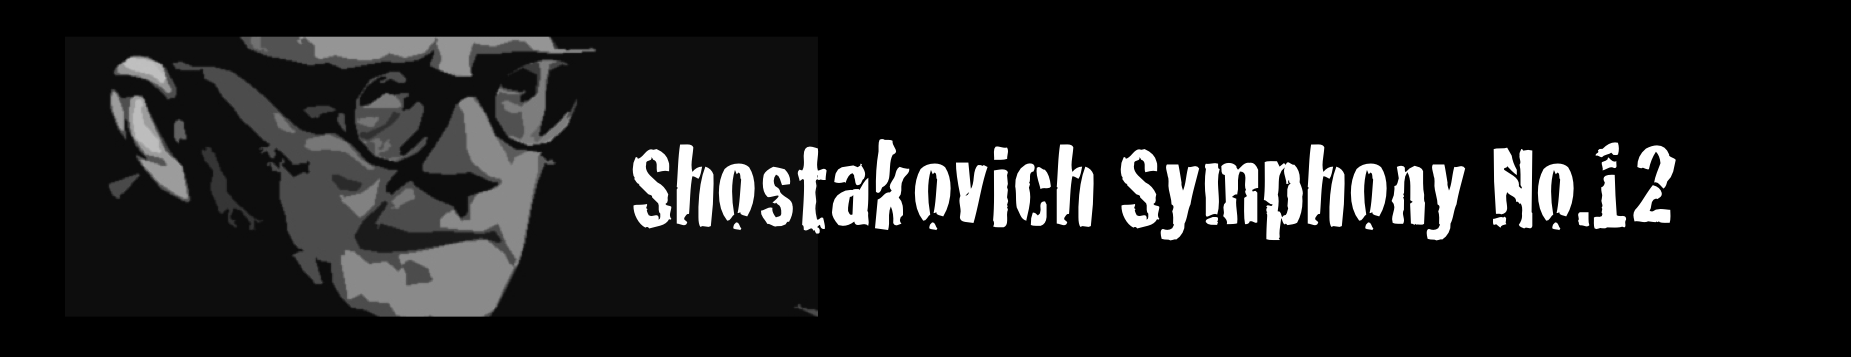 Shostakovich Symphony No.12